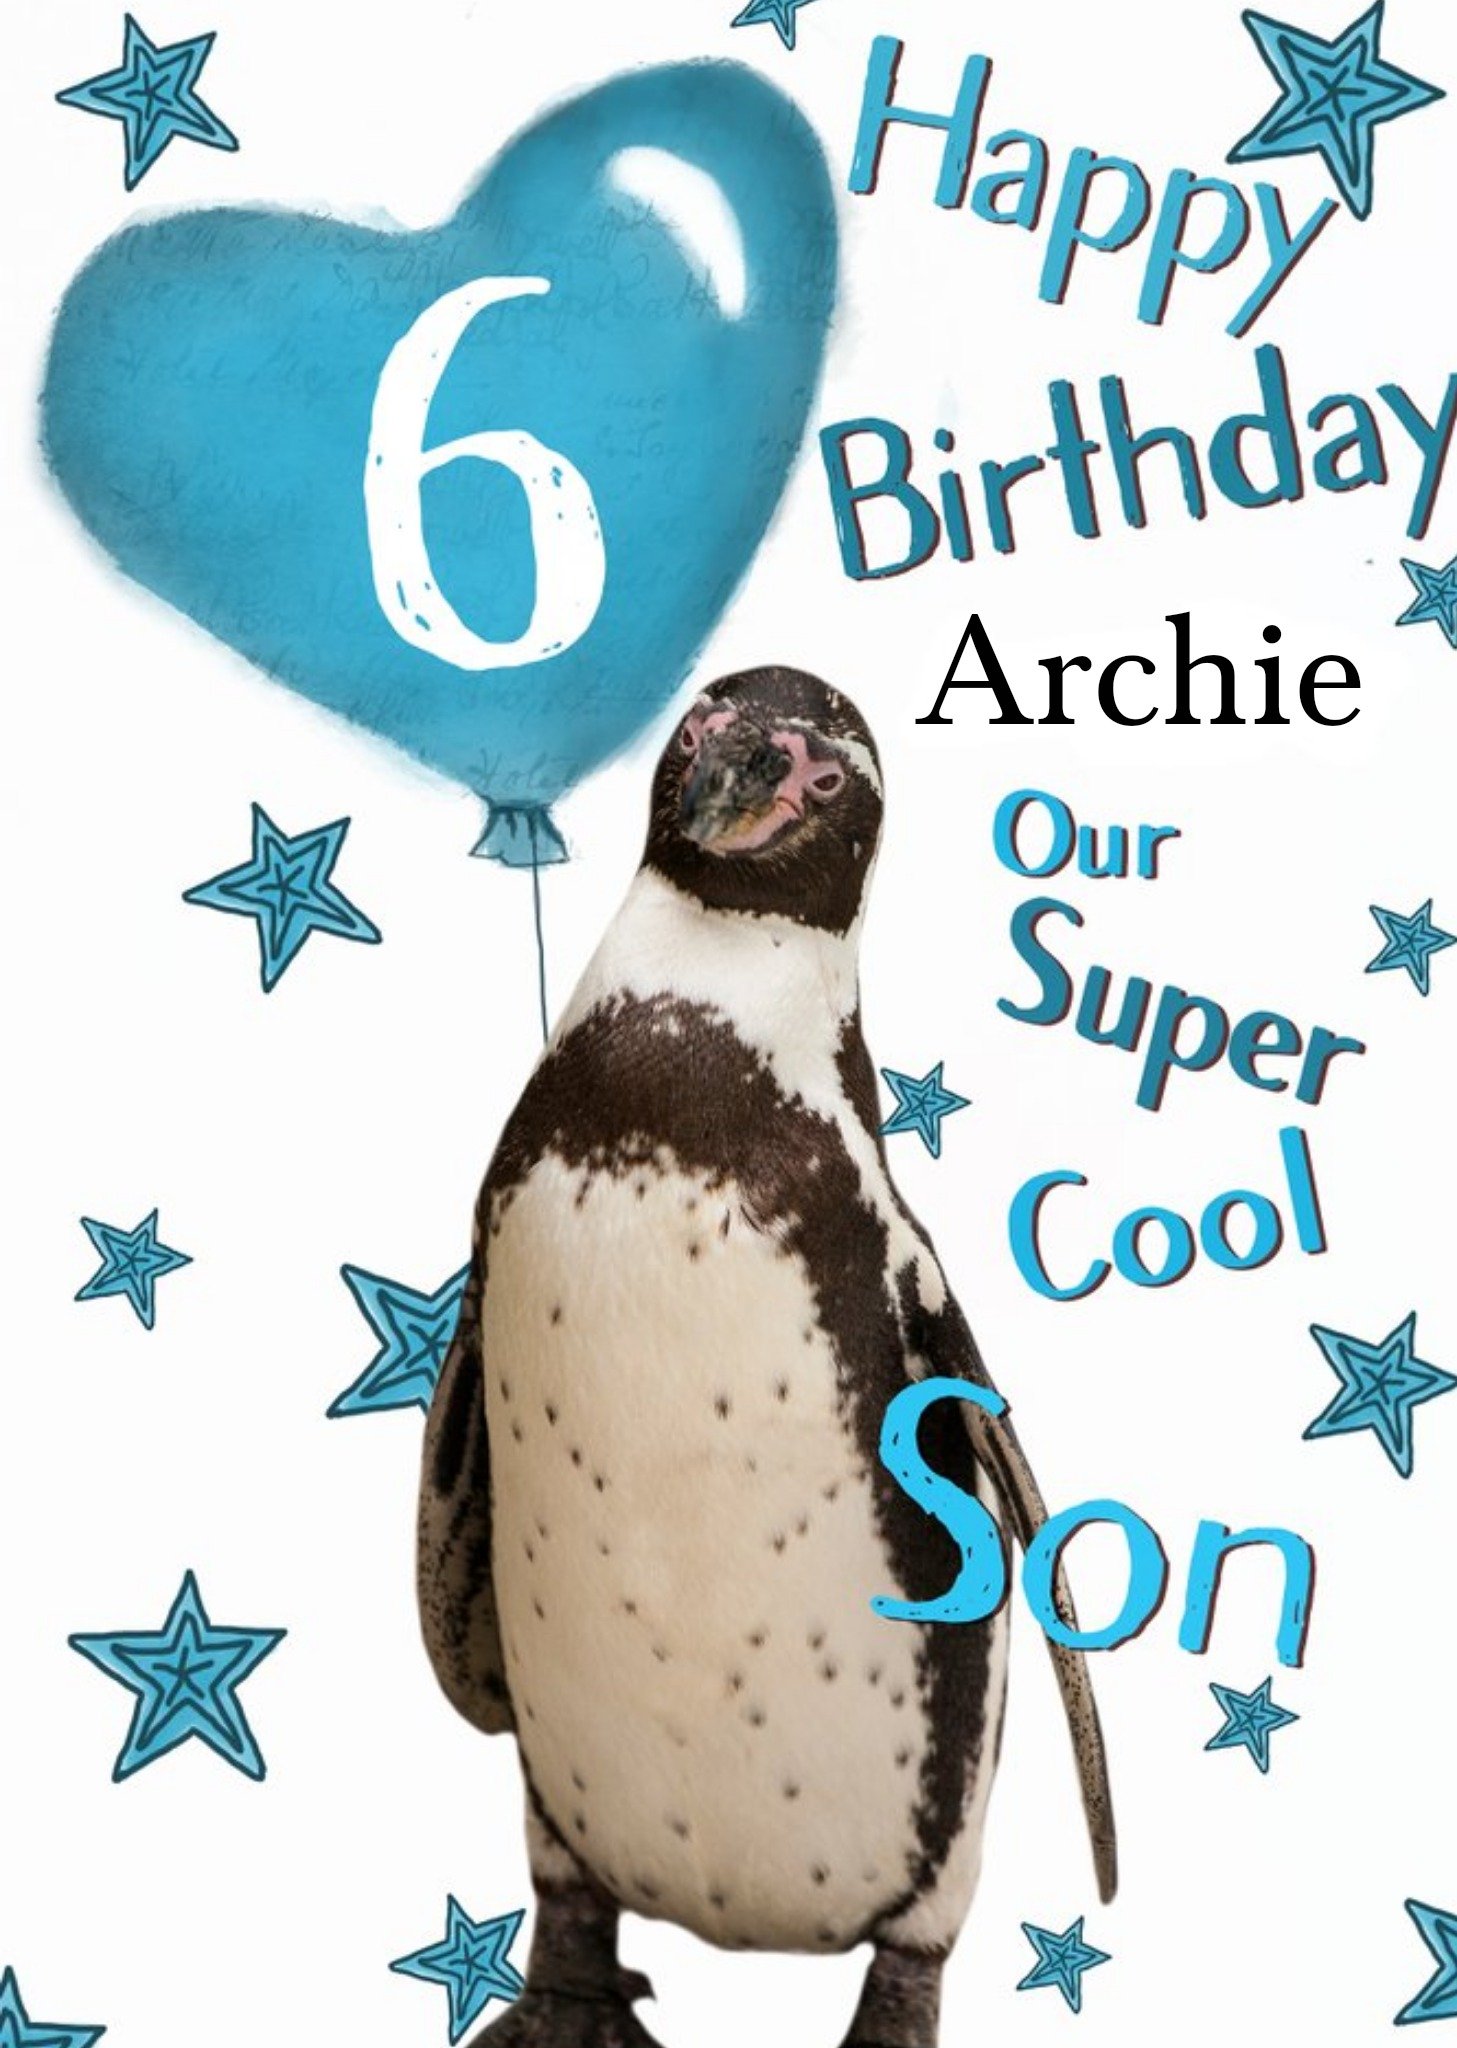 Moonpig Photo Of Penguin With Birthday Balloon Son 6th Birthday Card Ecard